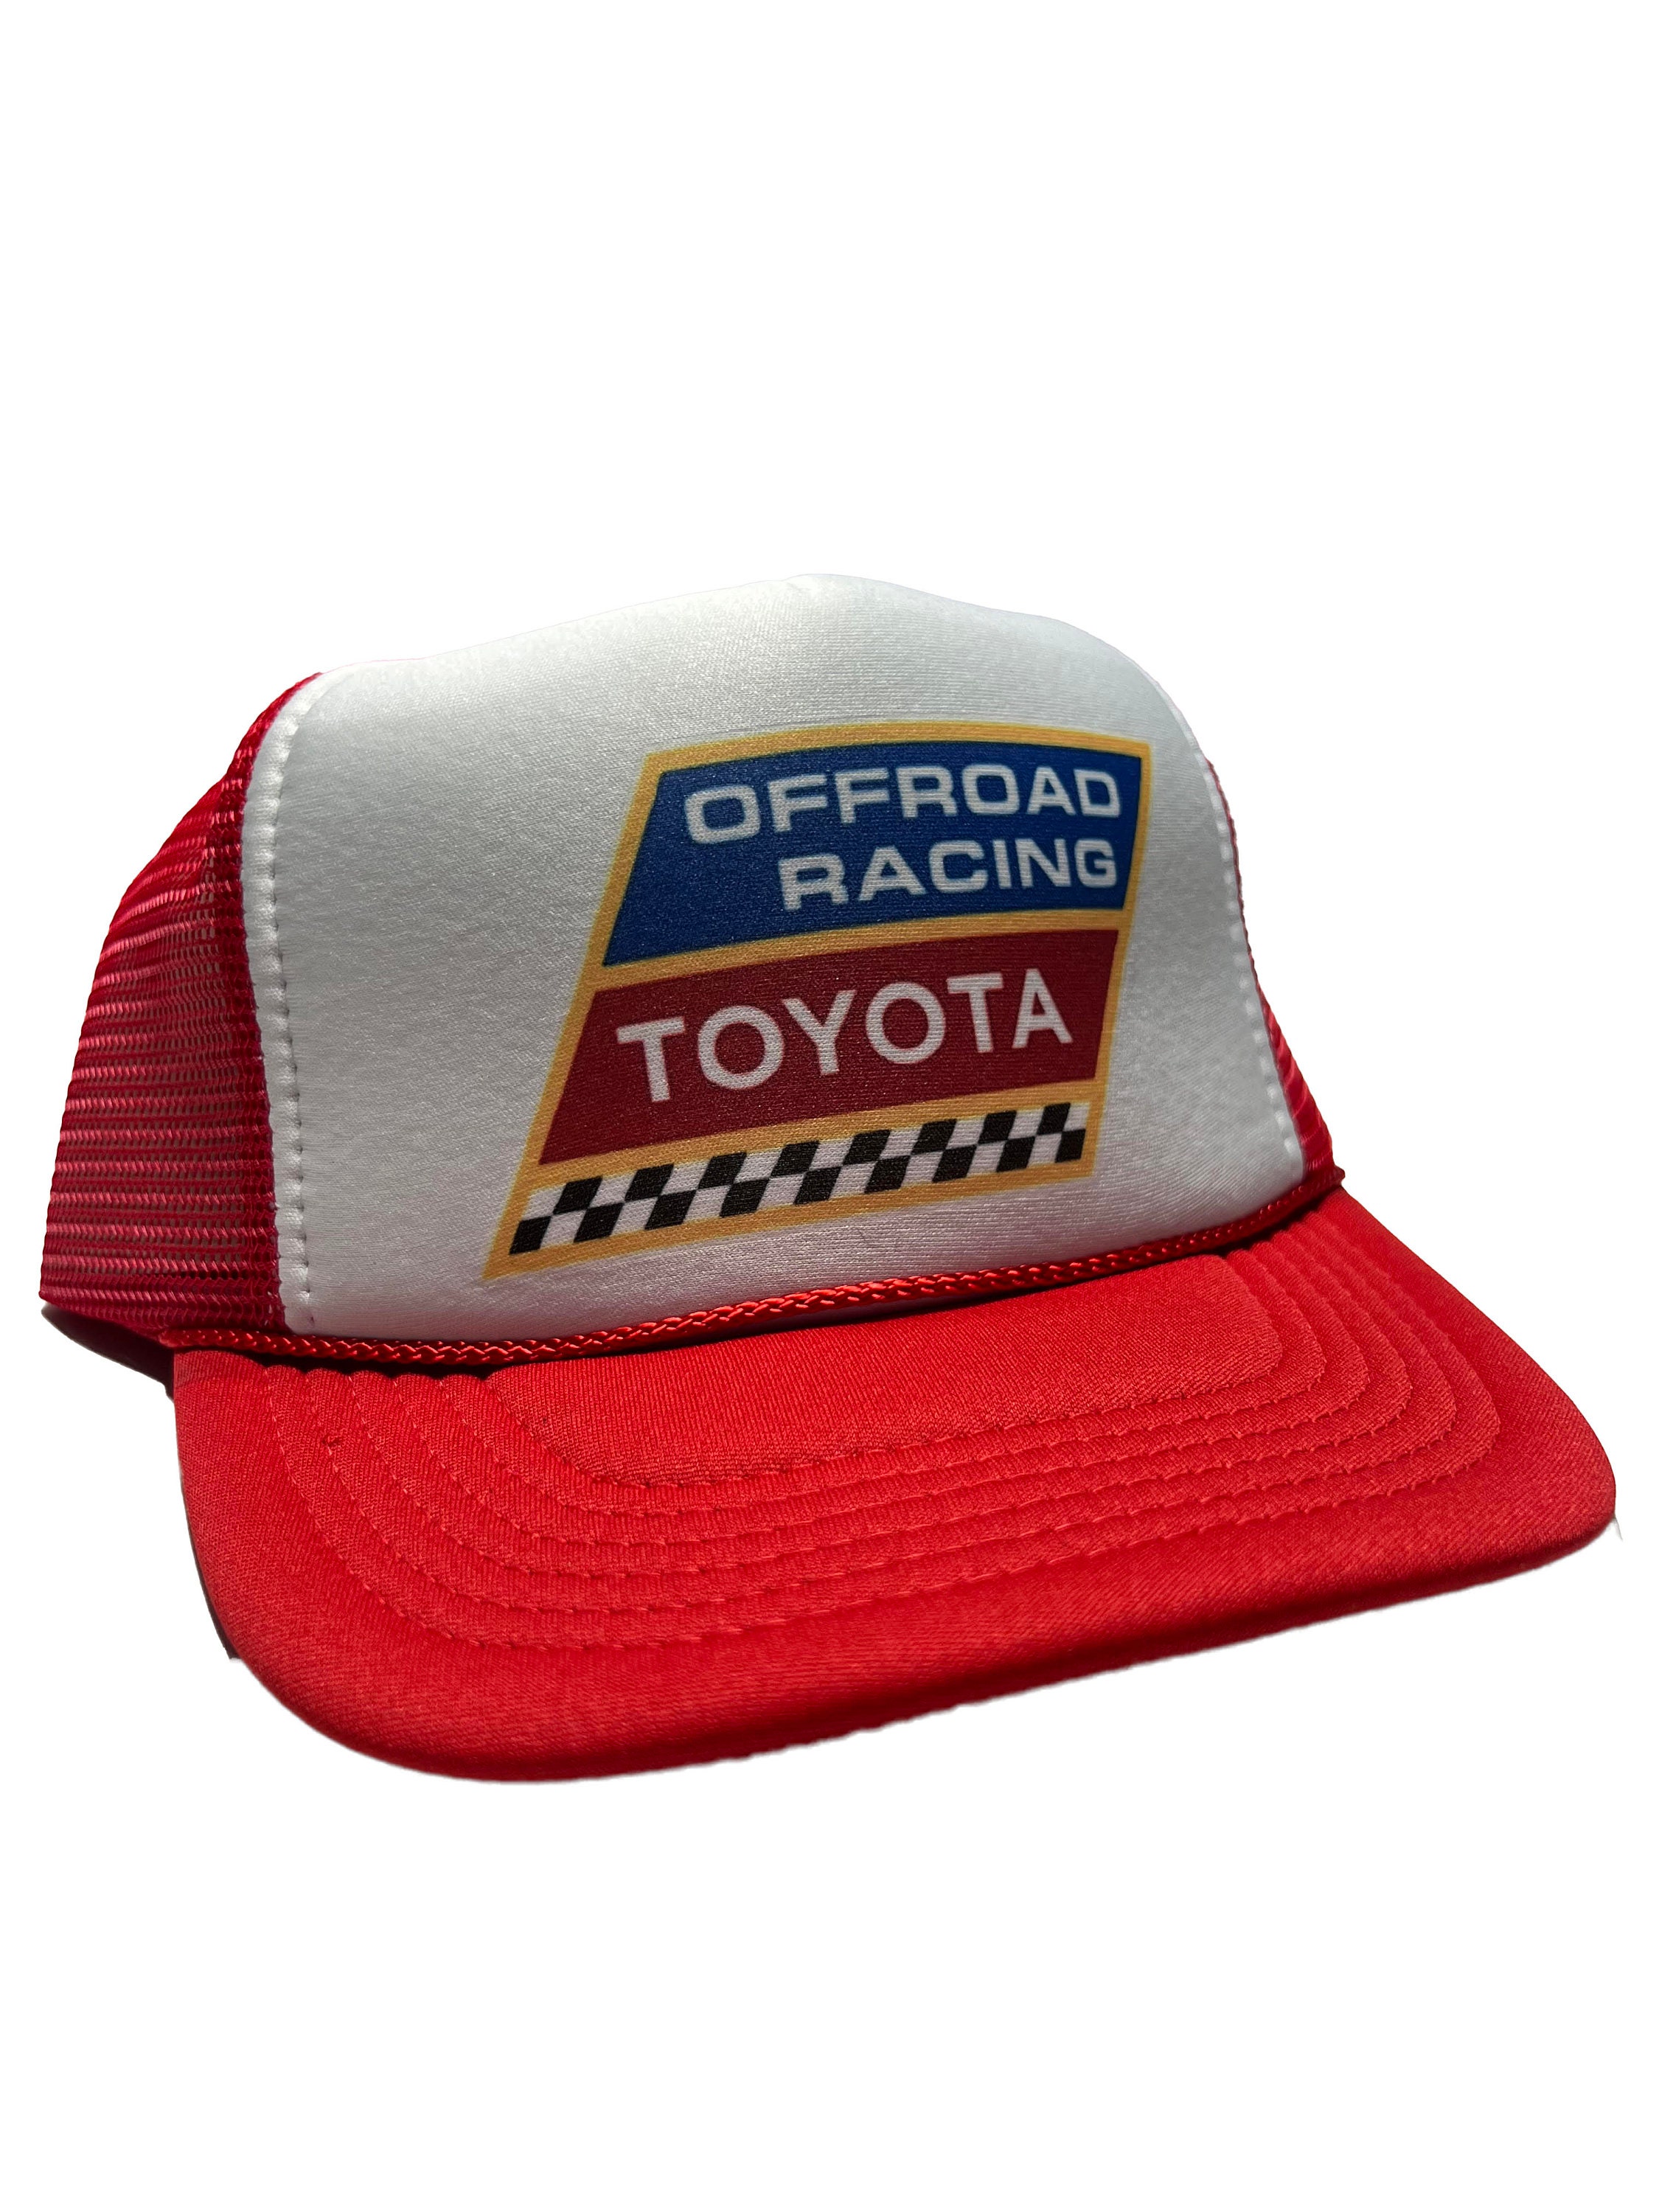 Toyota Offroad Racing Trucker Hat Vintage Style Red Mesh Snapback Retro  Trucker Cap